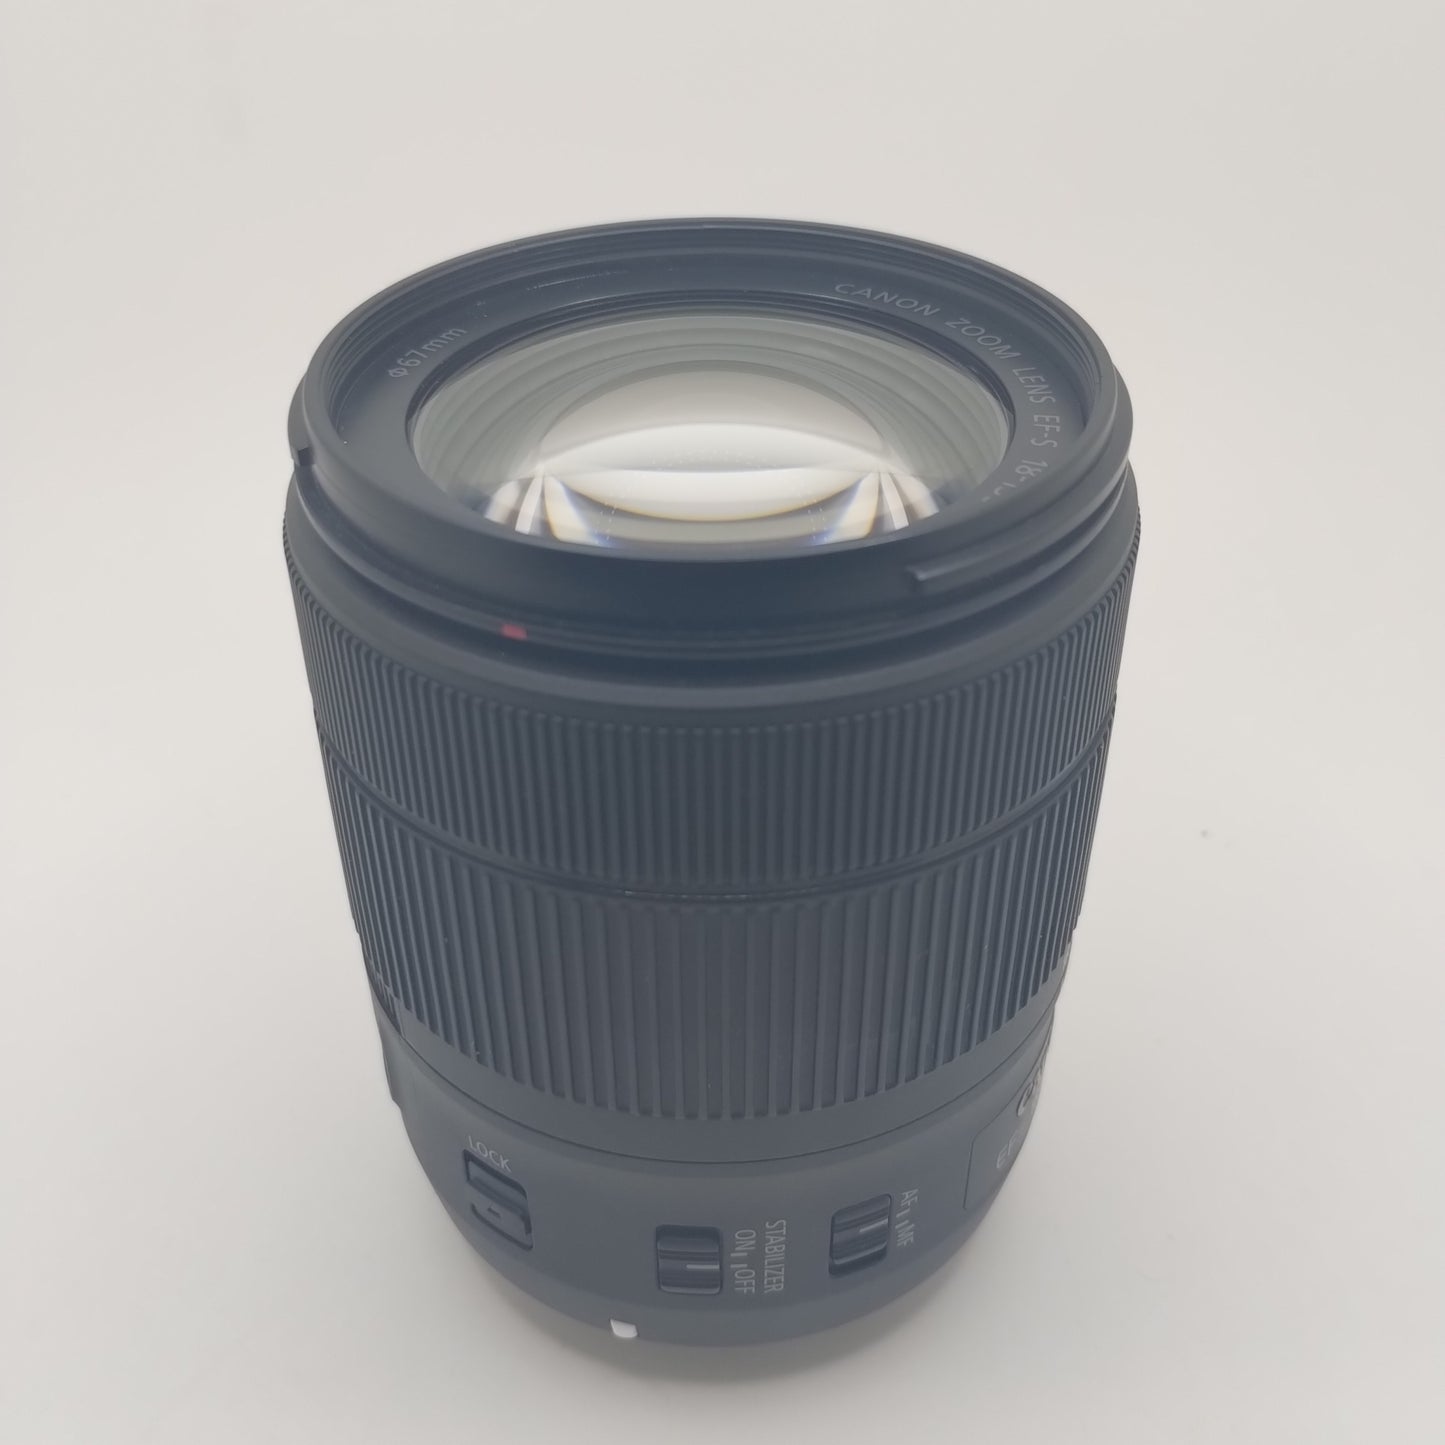 Canon EF-S Zoom Lens 18-135mm f/3.5-5.6 IS USM